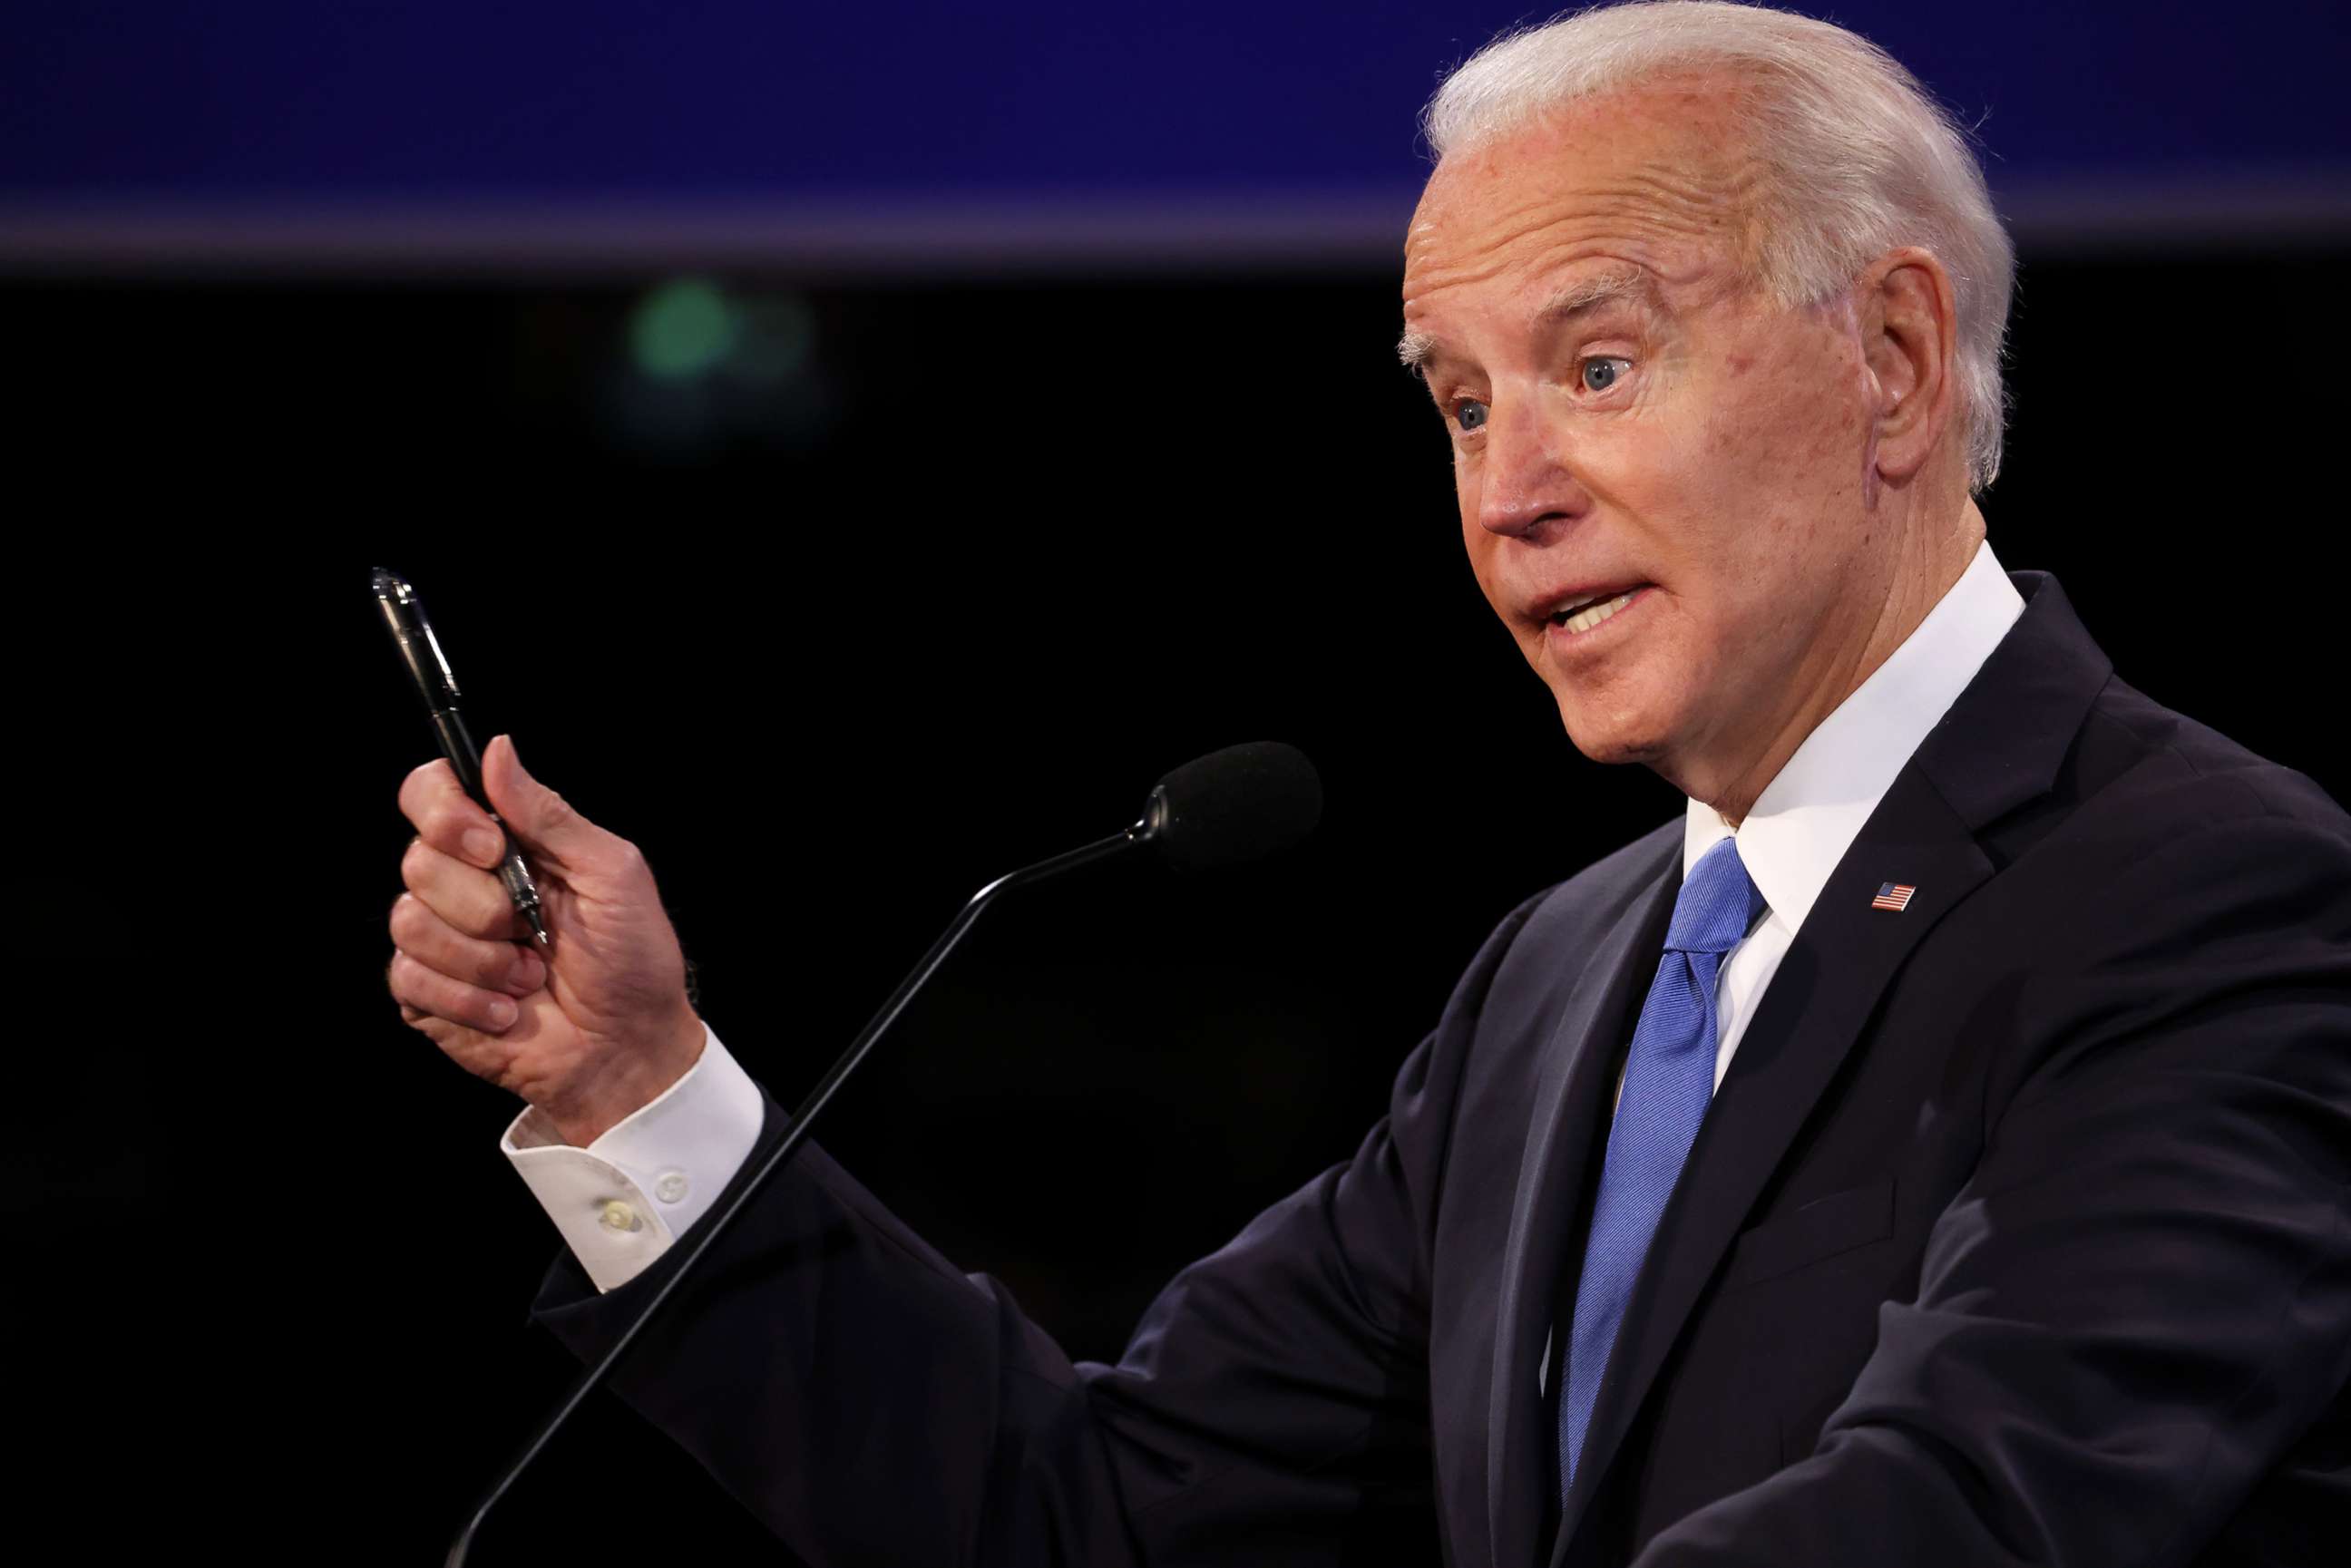 PHOTO: Democratic presidential nominee Joe Biden participates in the final presidential debate on Oct. 22, 2020, in Nashville, Tenn.